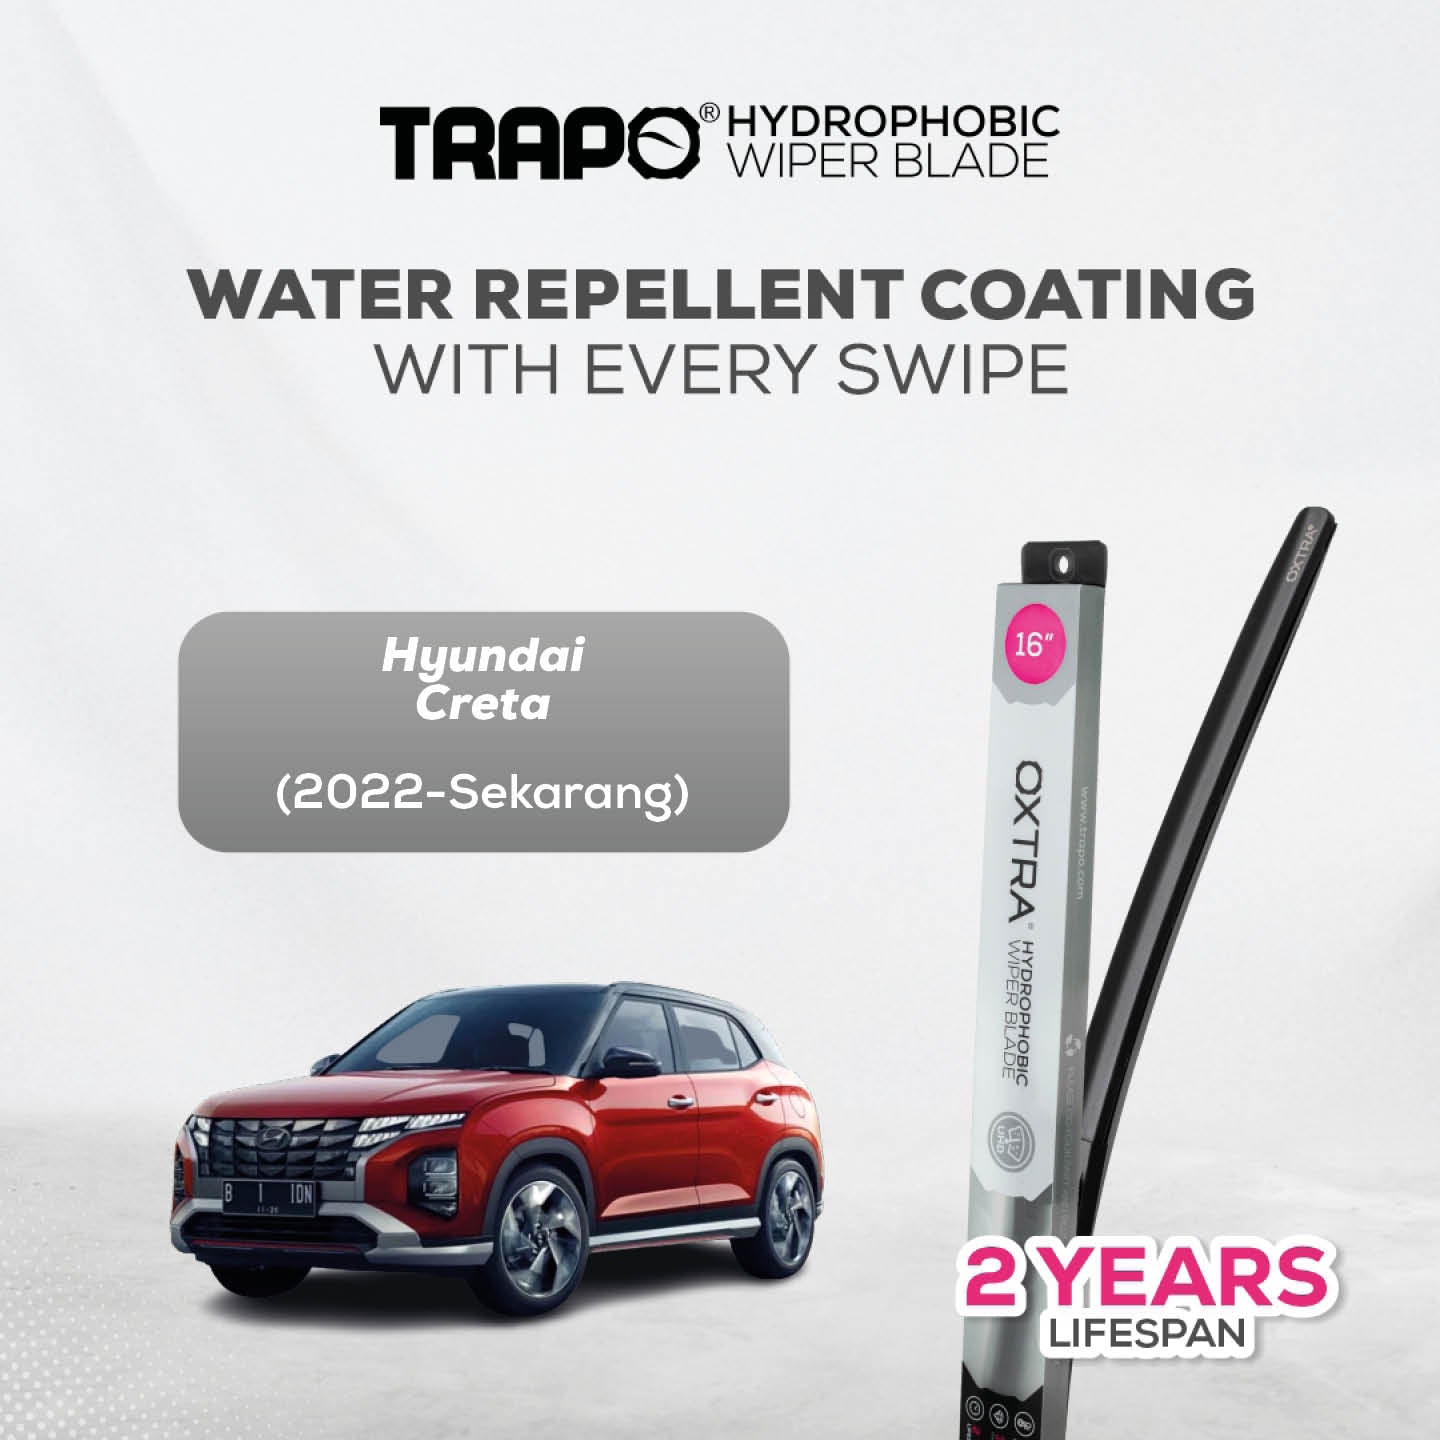 Trapo Hydrophobic Wiper Blade Hyundai Creta (2022-Sekarang)